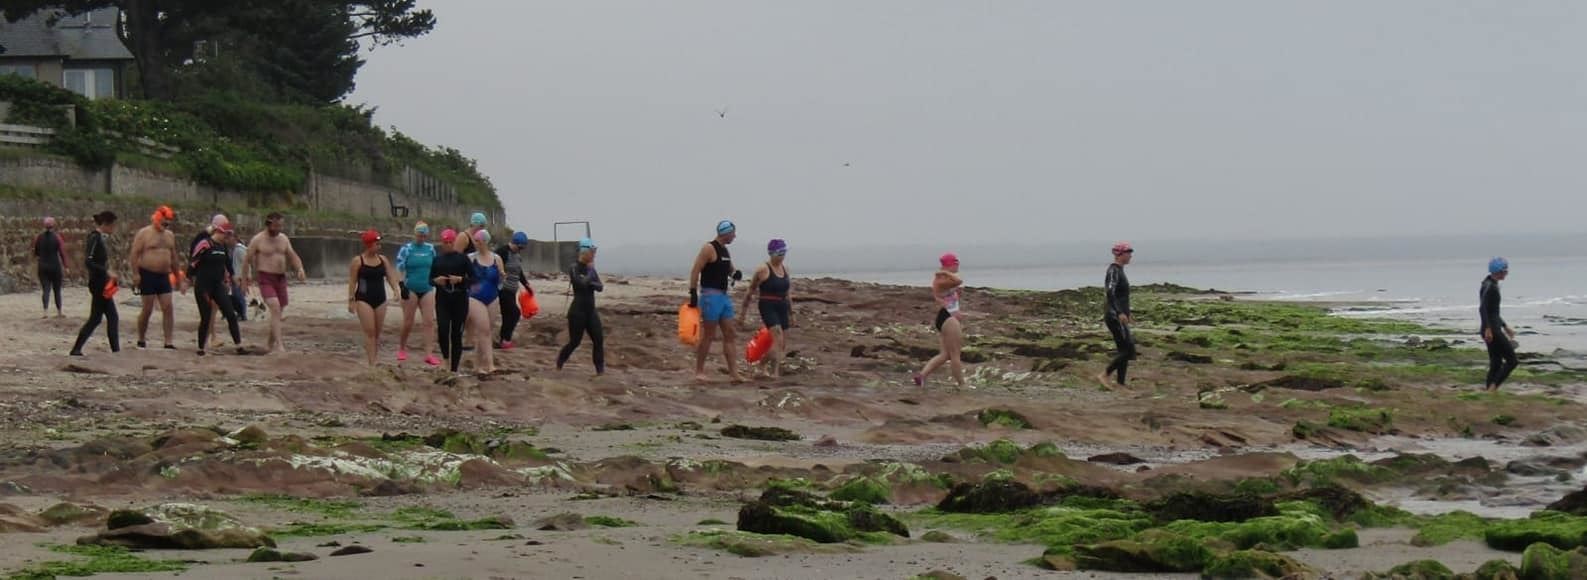 Swimmers head towards the beach.